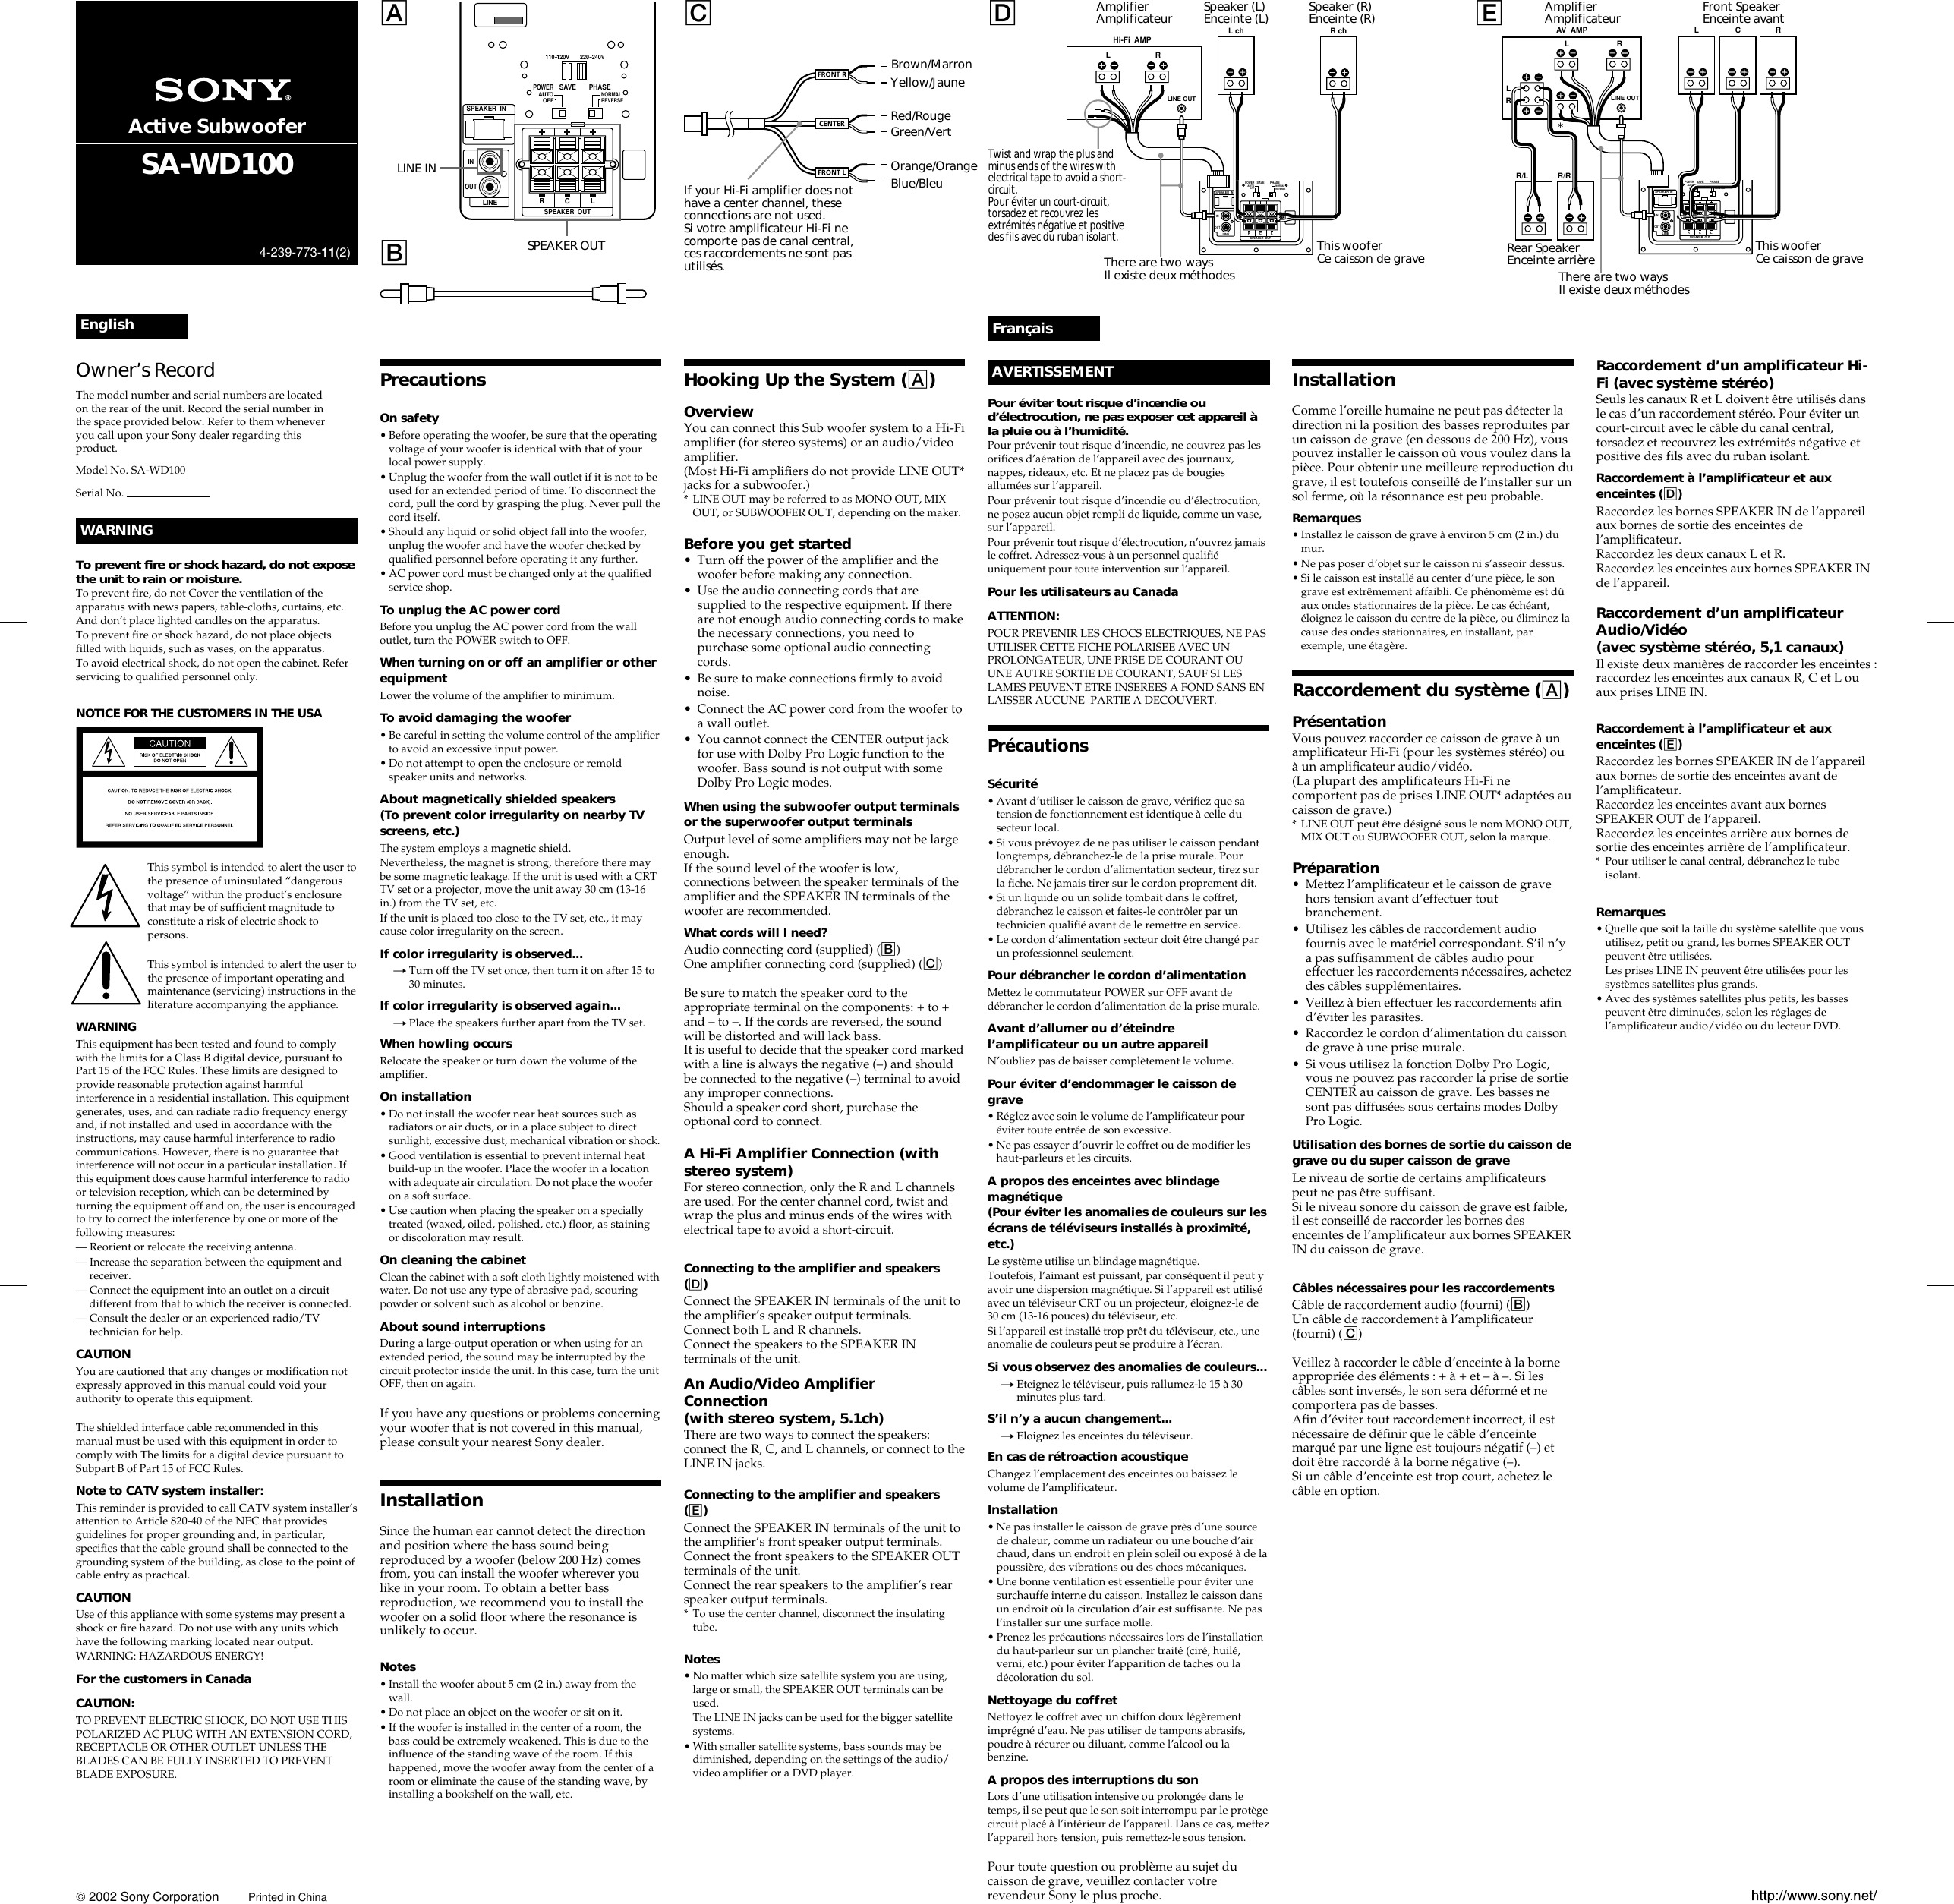 Page 1 of 2 - Sony Sony-Sa-Wd100-Users-Manual- SA-WD100  Sony-sa-wd100-users-manual